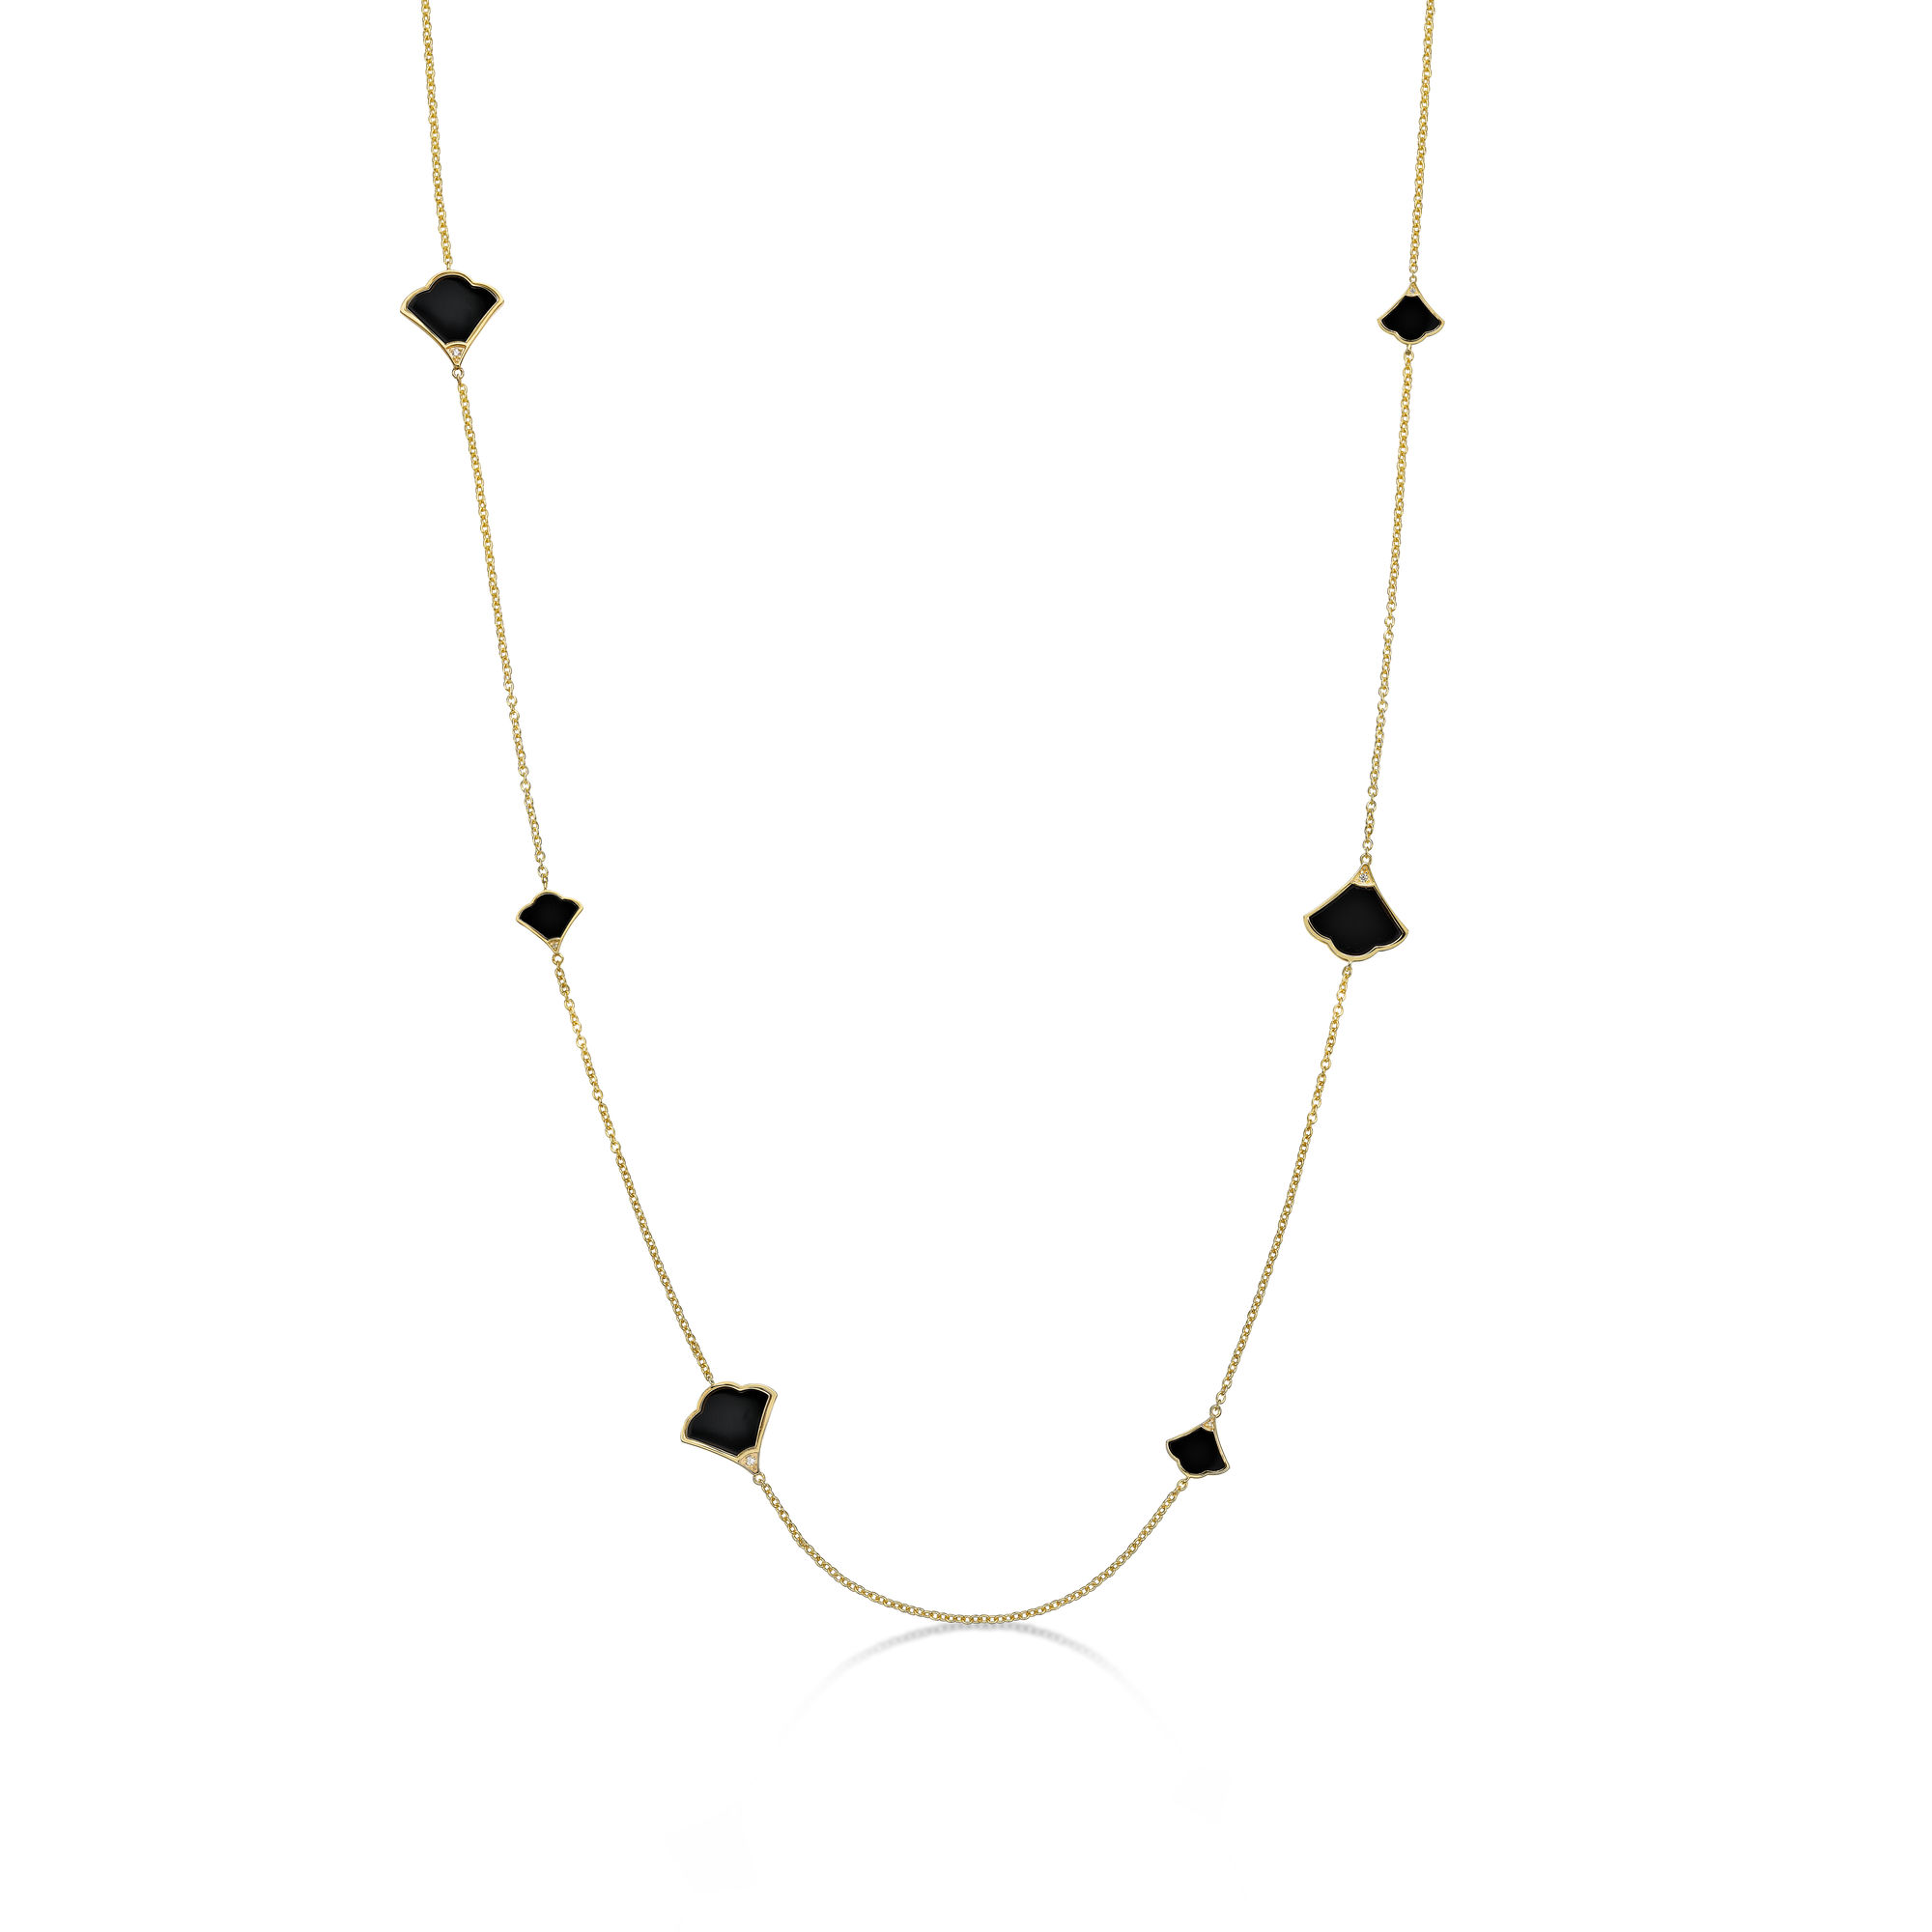 48836-necklace-fashion-jewelry-sterling-silver-black-onyx-48836-3.jpg